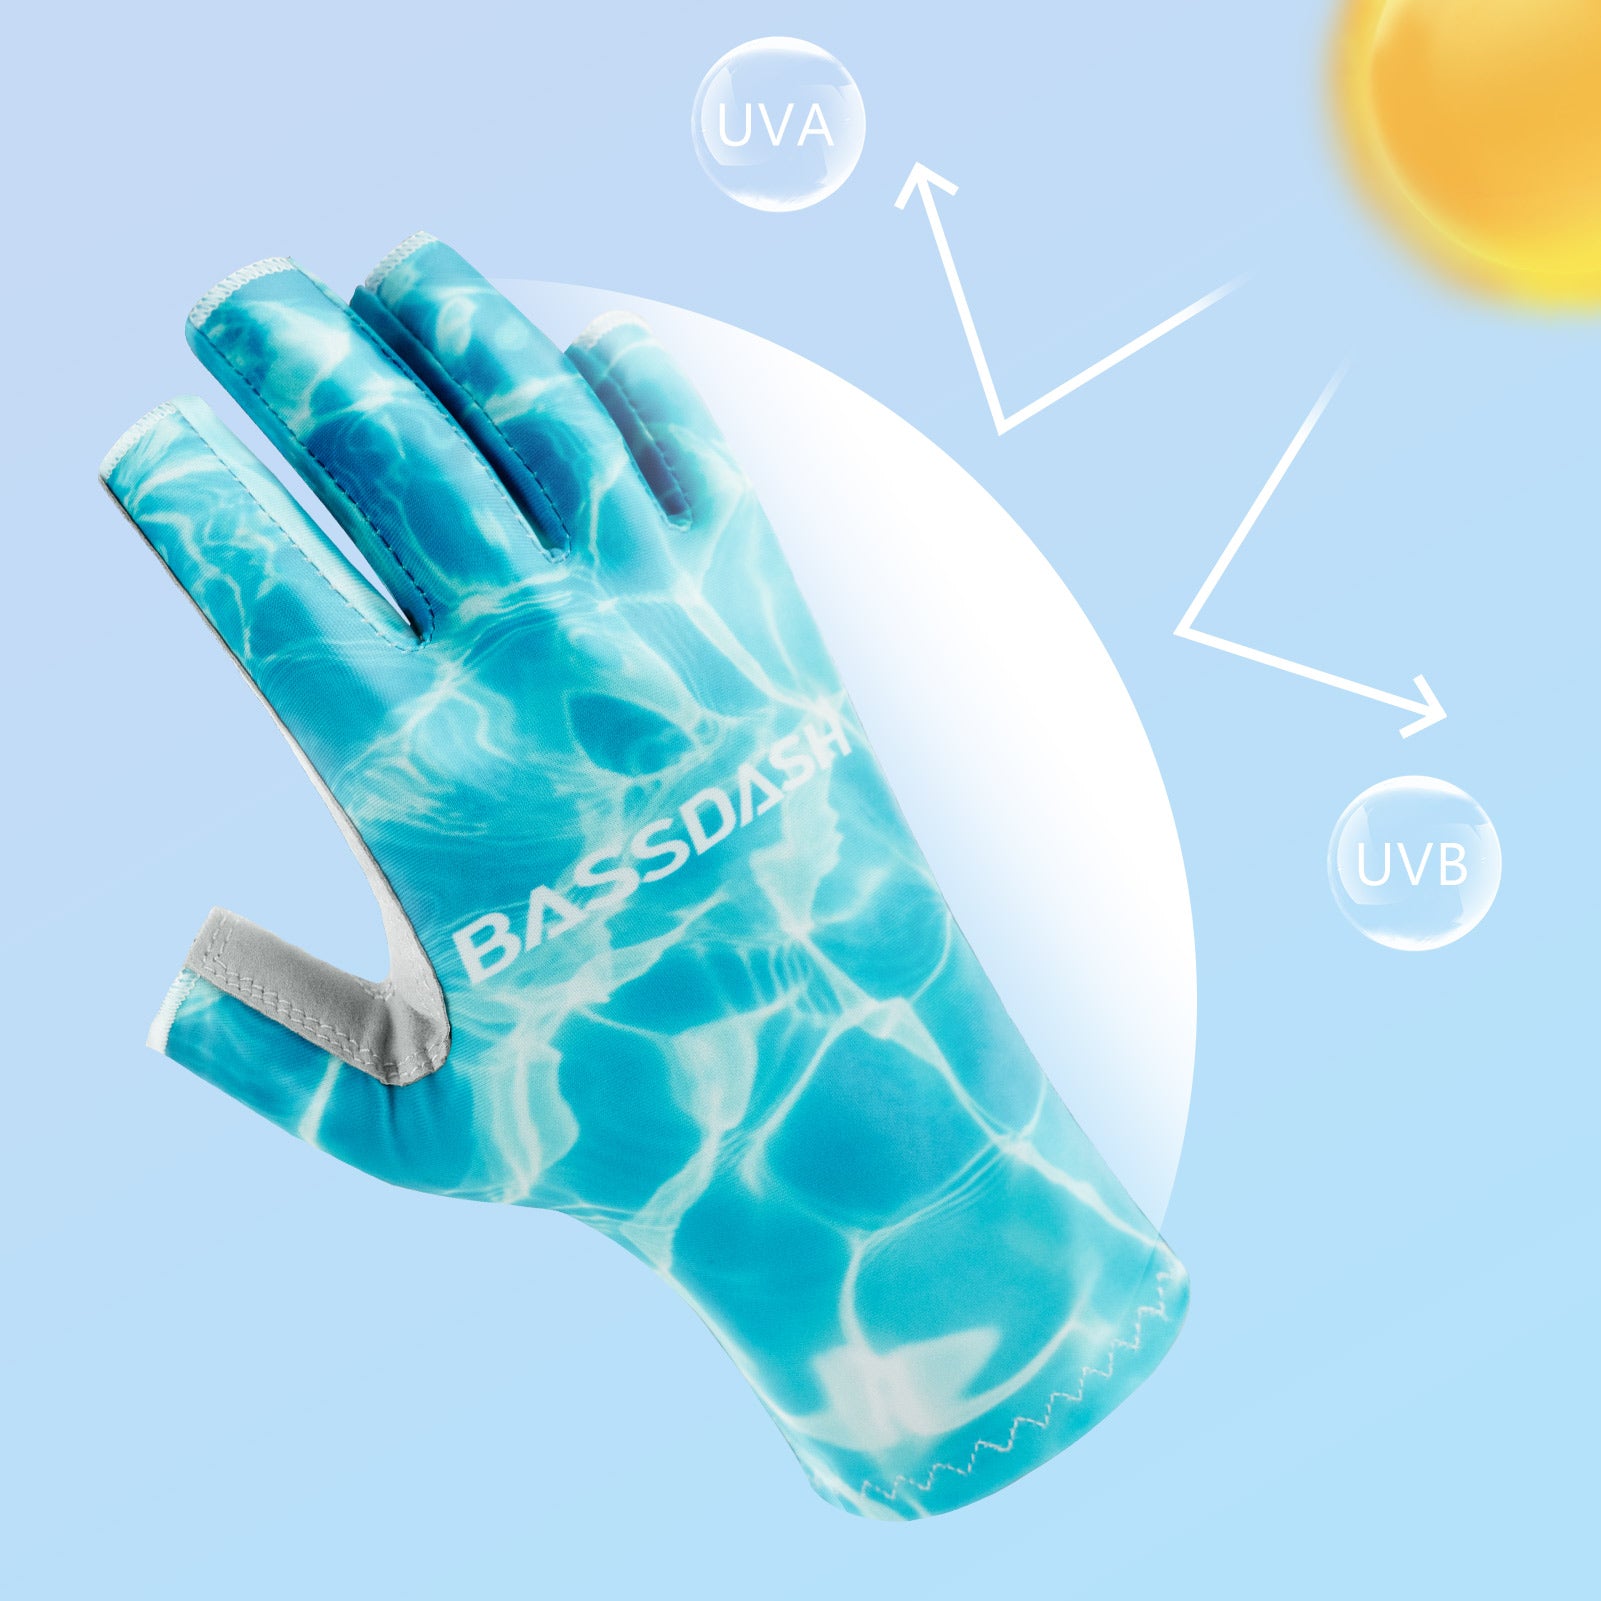  BASSDASH Astro Fishing Gloves Men's Women's Fingerless Gloves  for Game Fishing Kayaking Paddling Sailing MTB : Sports & Outdoors